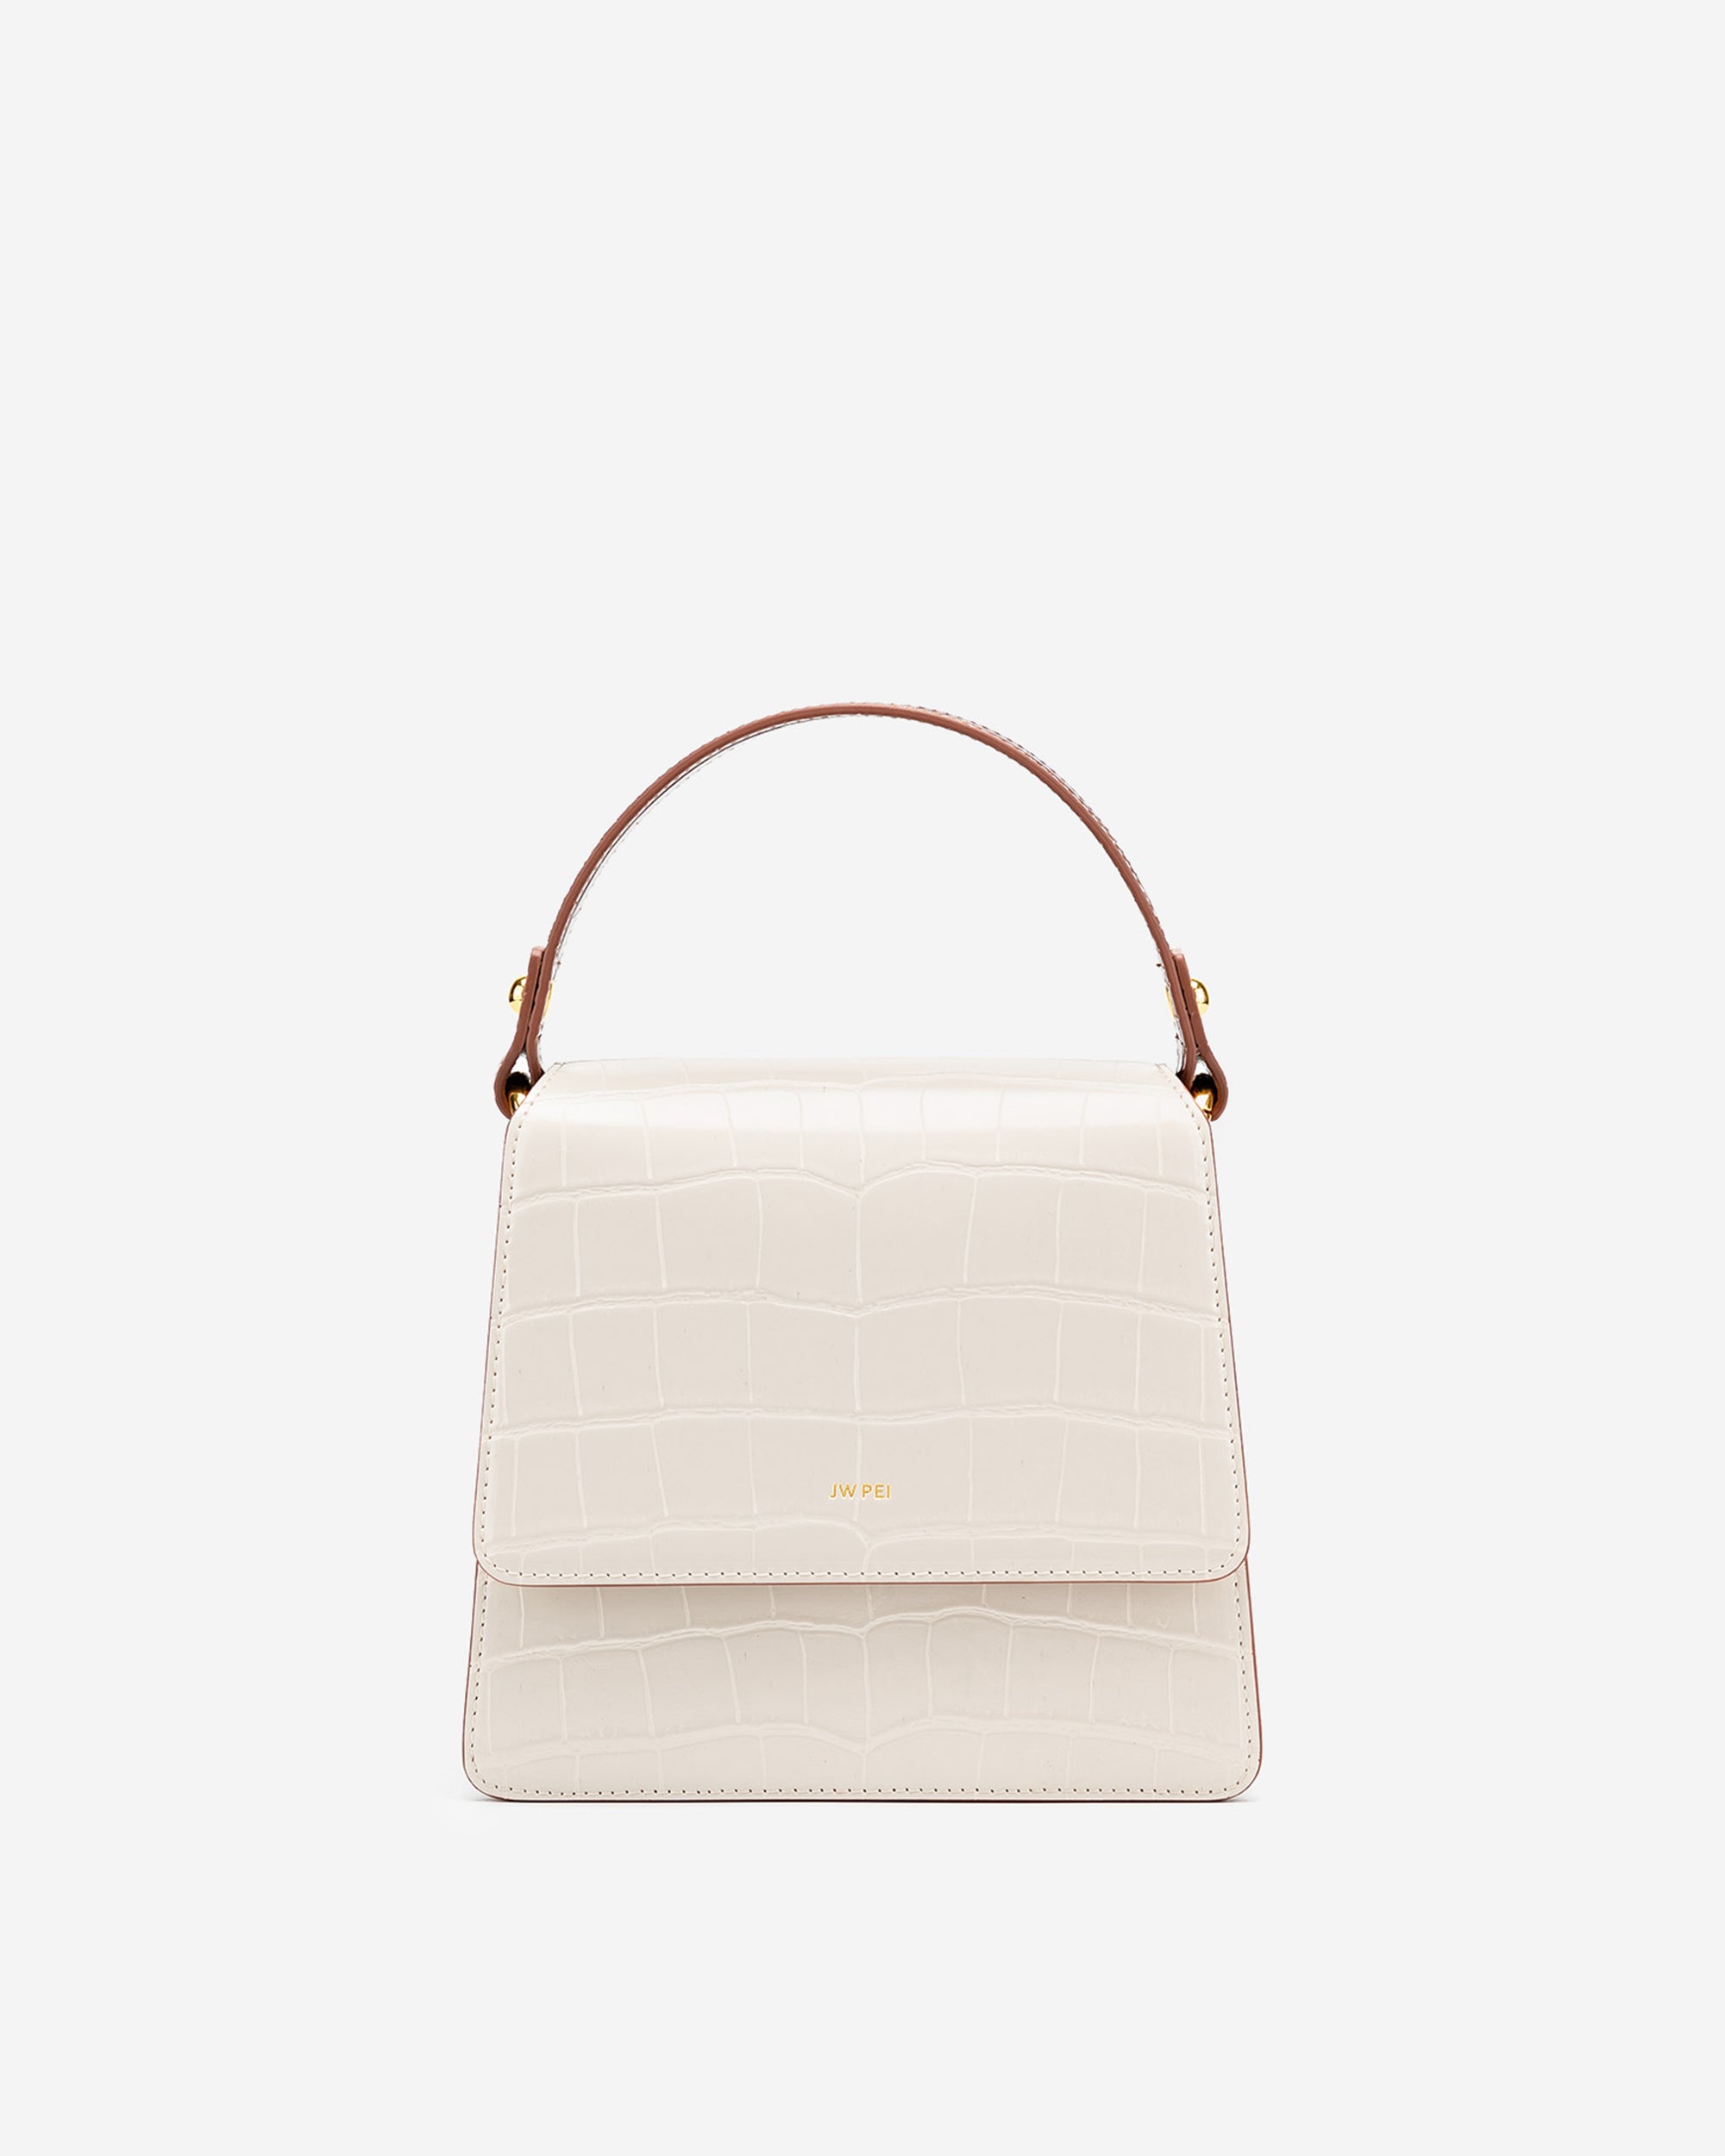 JW Pei Launched a Shoe Version of Its Popular Handbag